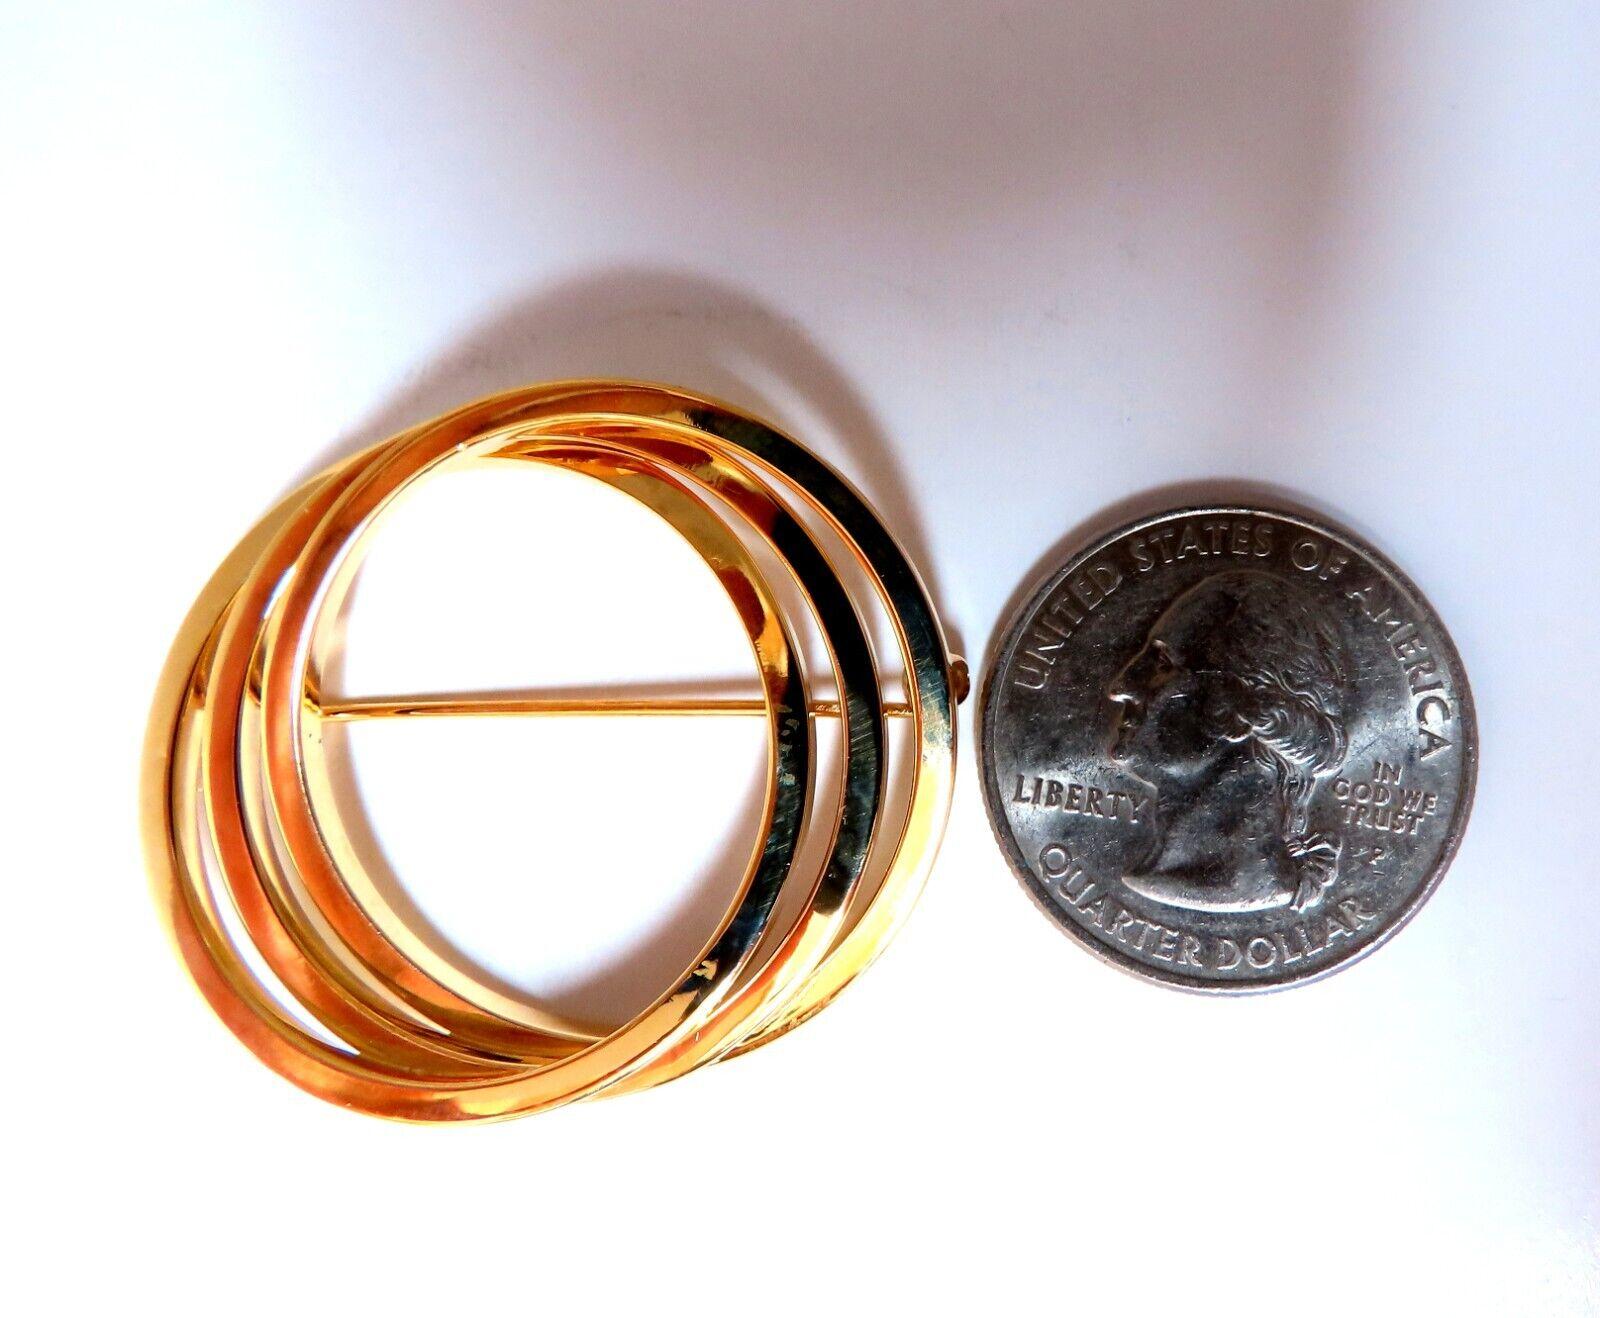 Circles Pin.

40 x 33mm diameter

18kt. yellow gold 

5.8 grams